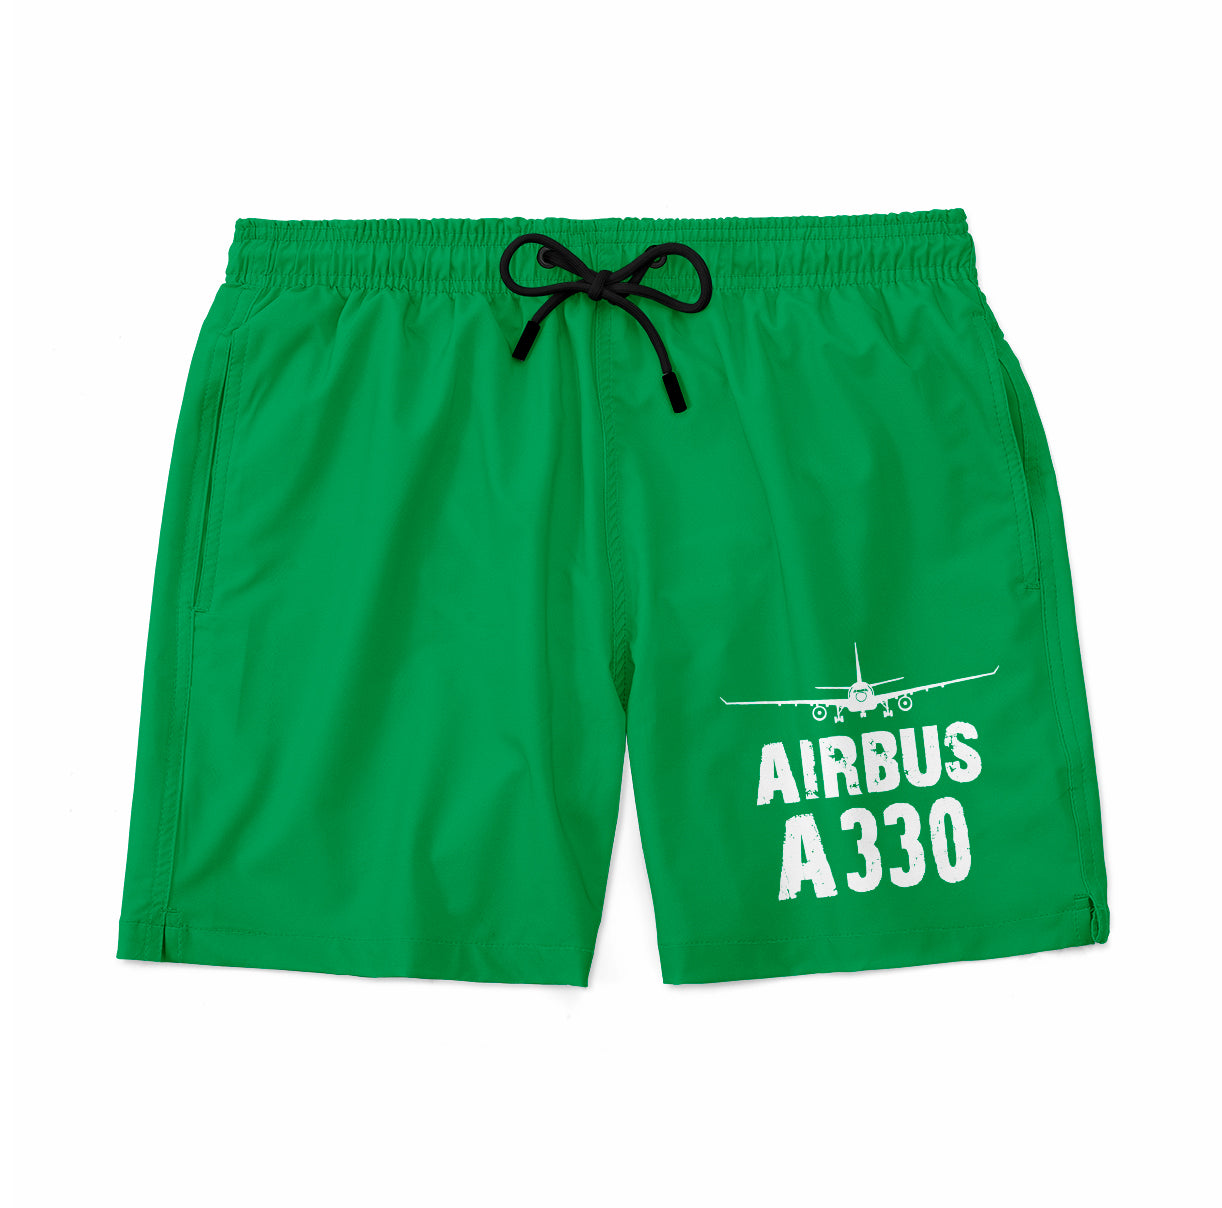 Airbus A330 & Plane Designed Swim Trunks & Shorts